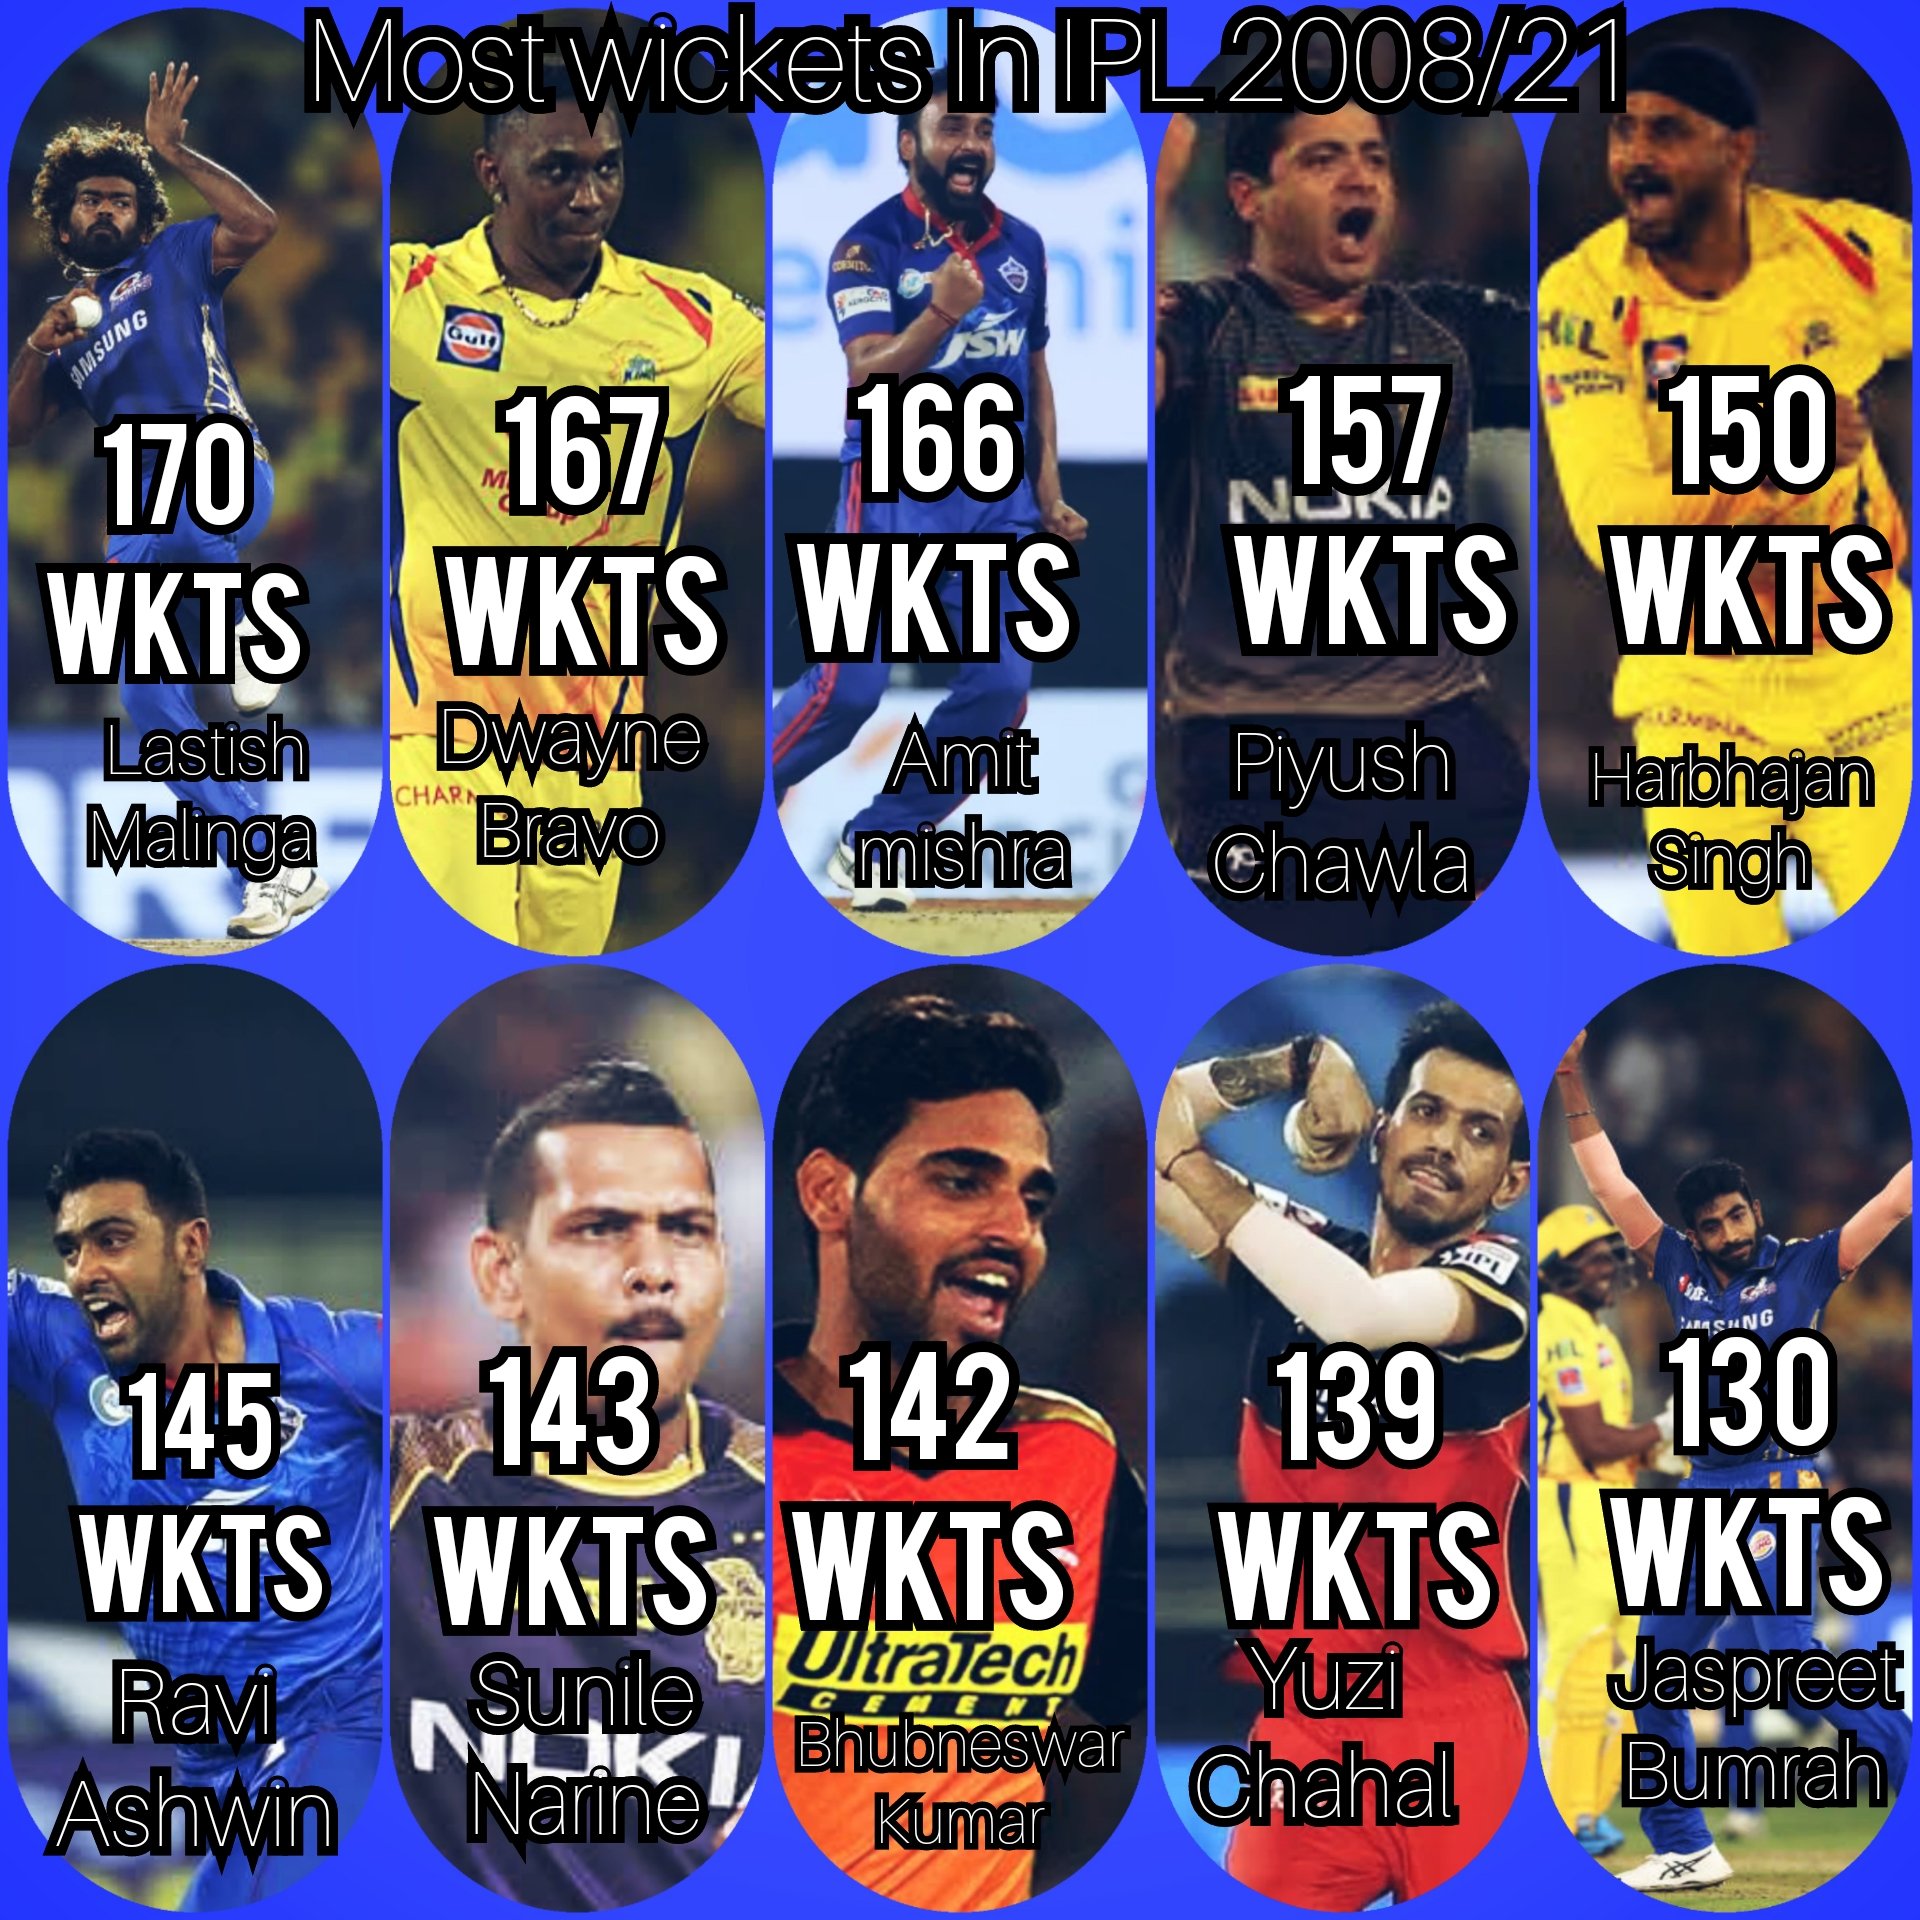 Most wickets in IPL 2008/21  
HAPPY BIRTHDAY AMIT MISHRA   